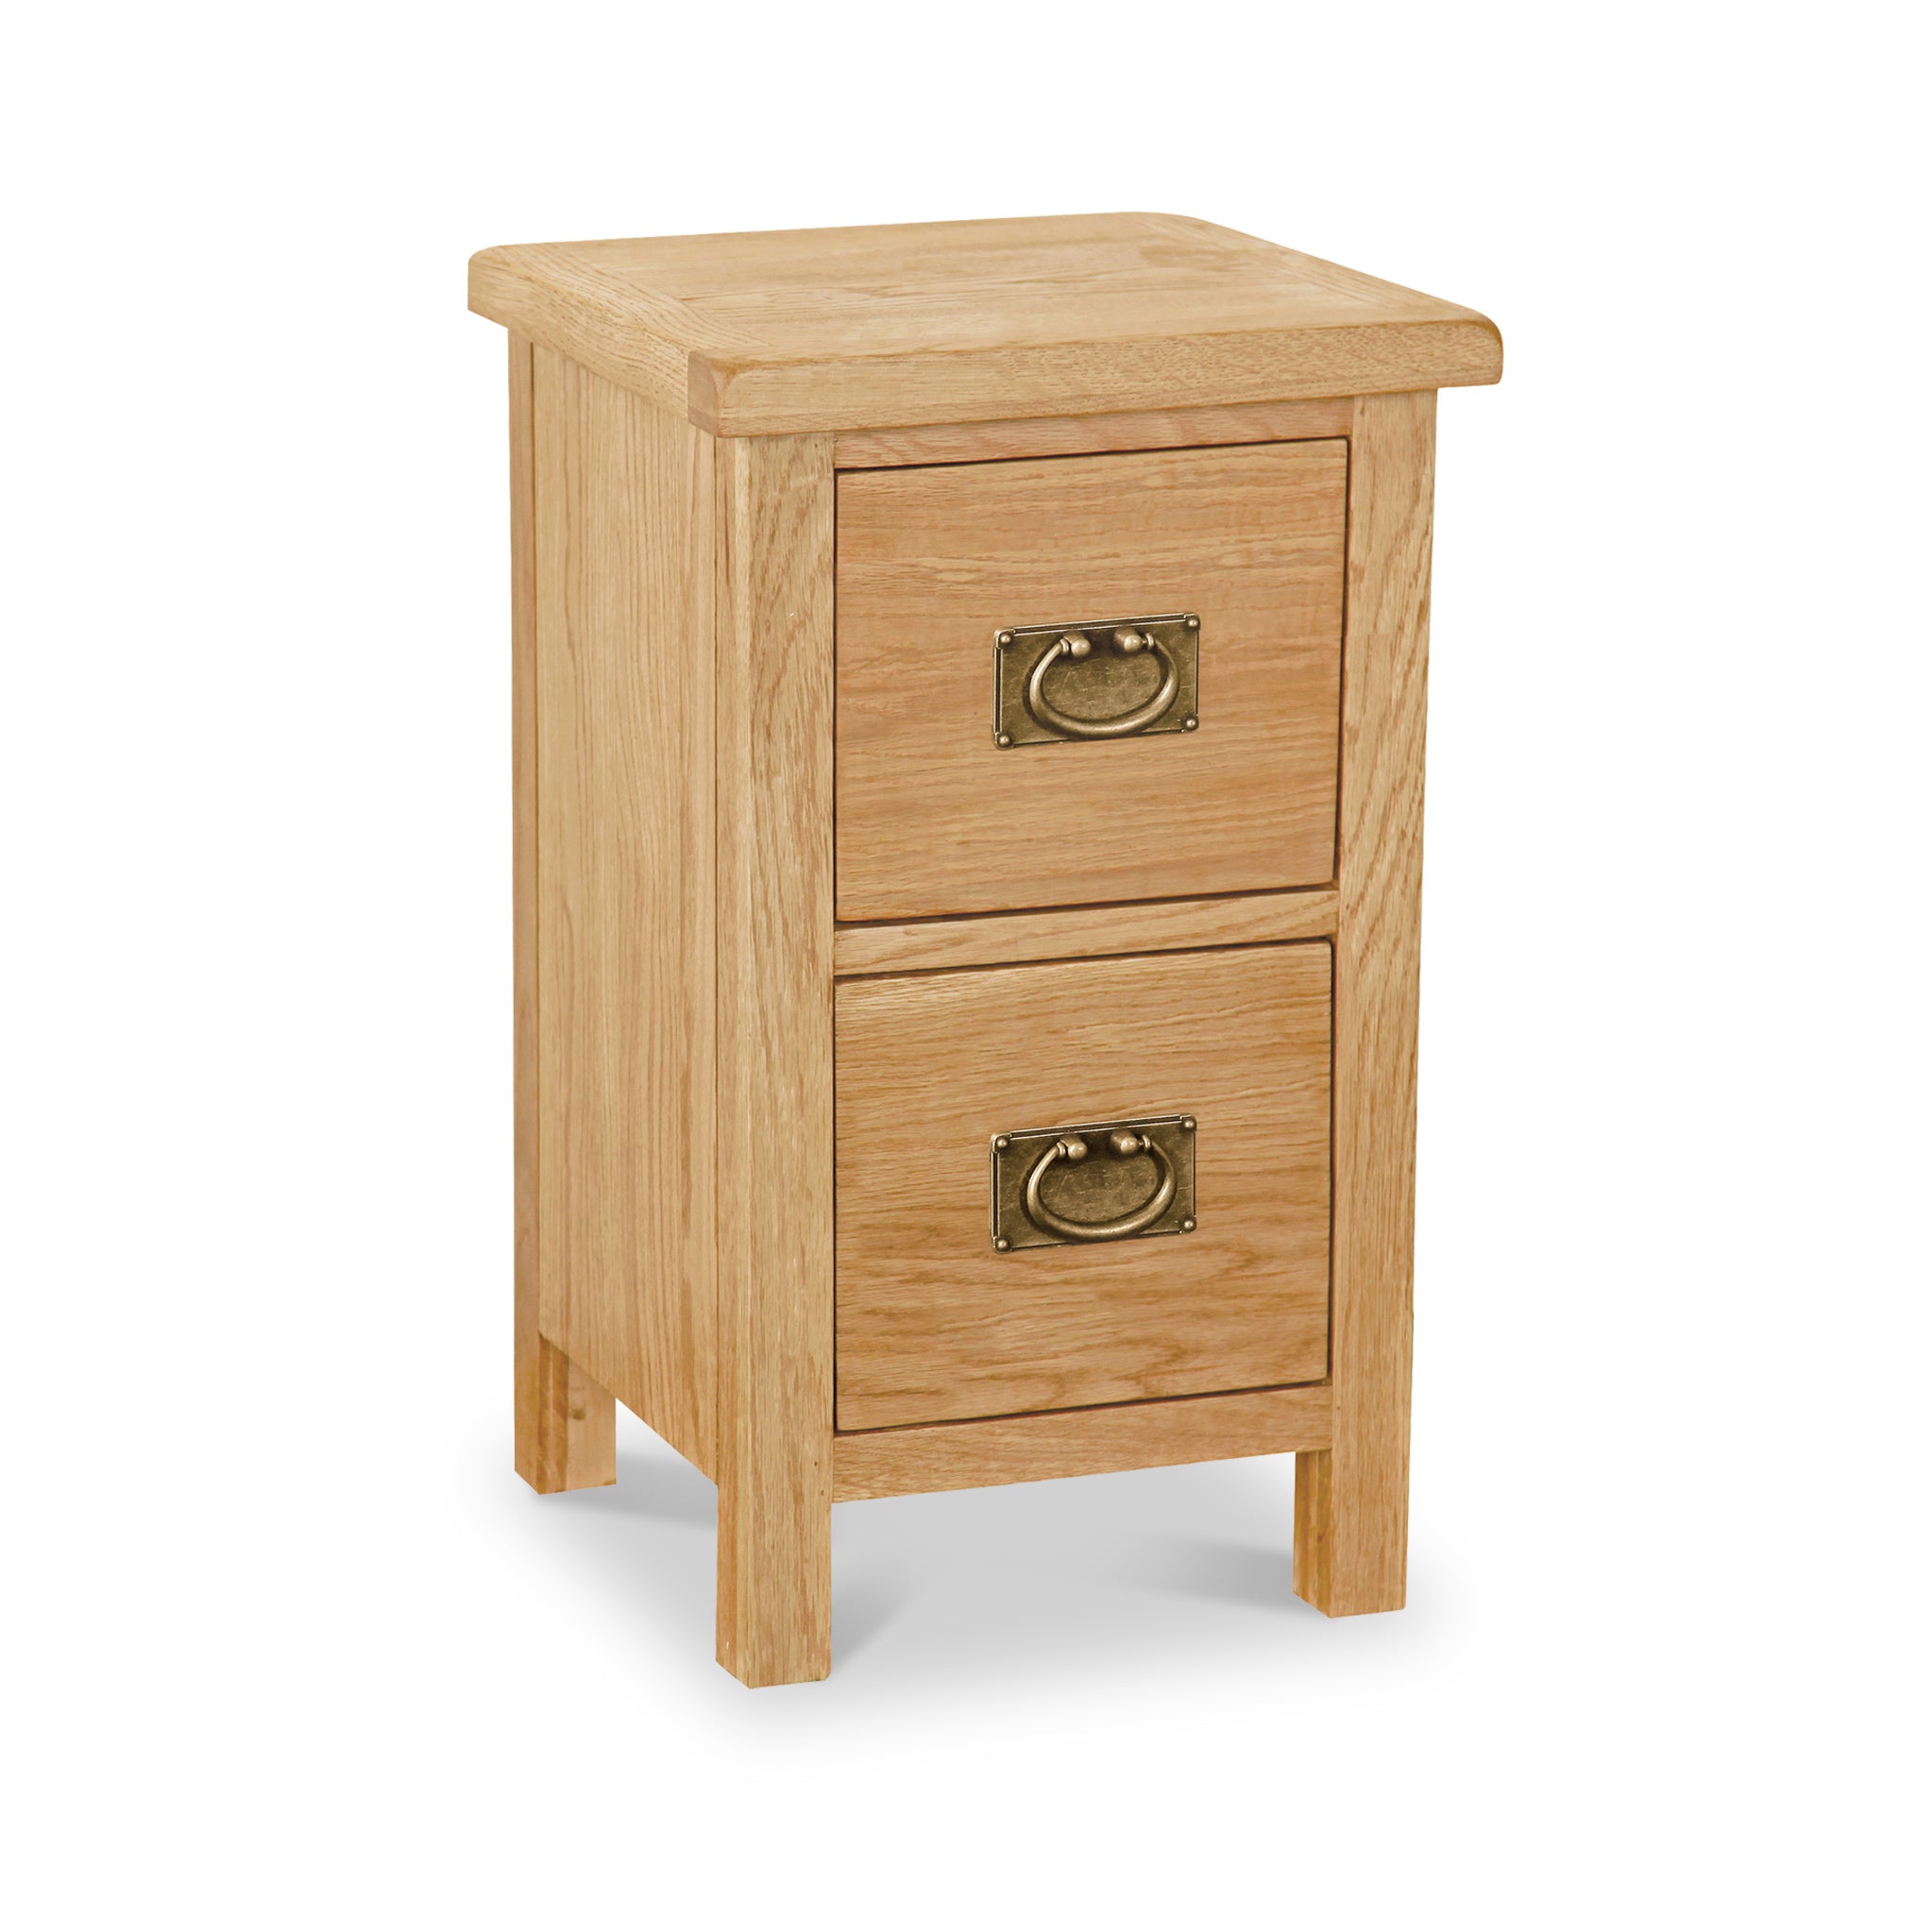 Lanner Oak Slim 2 Drawer Bedside Table Narrow Wooden Nightstand Cabinet